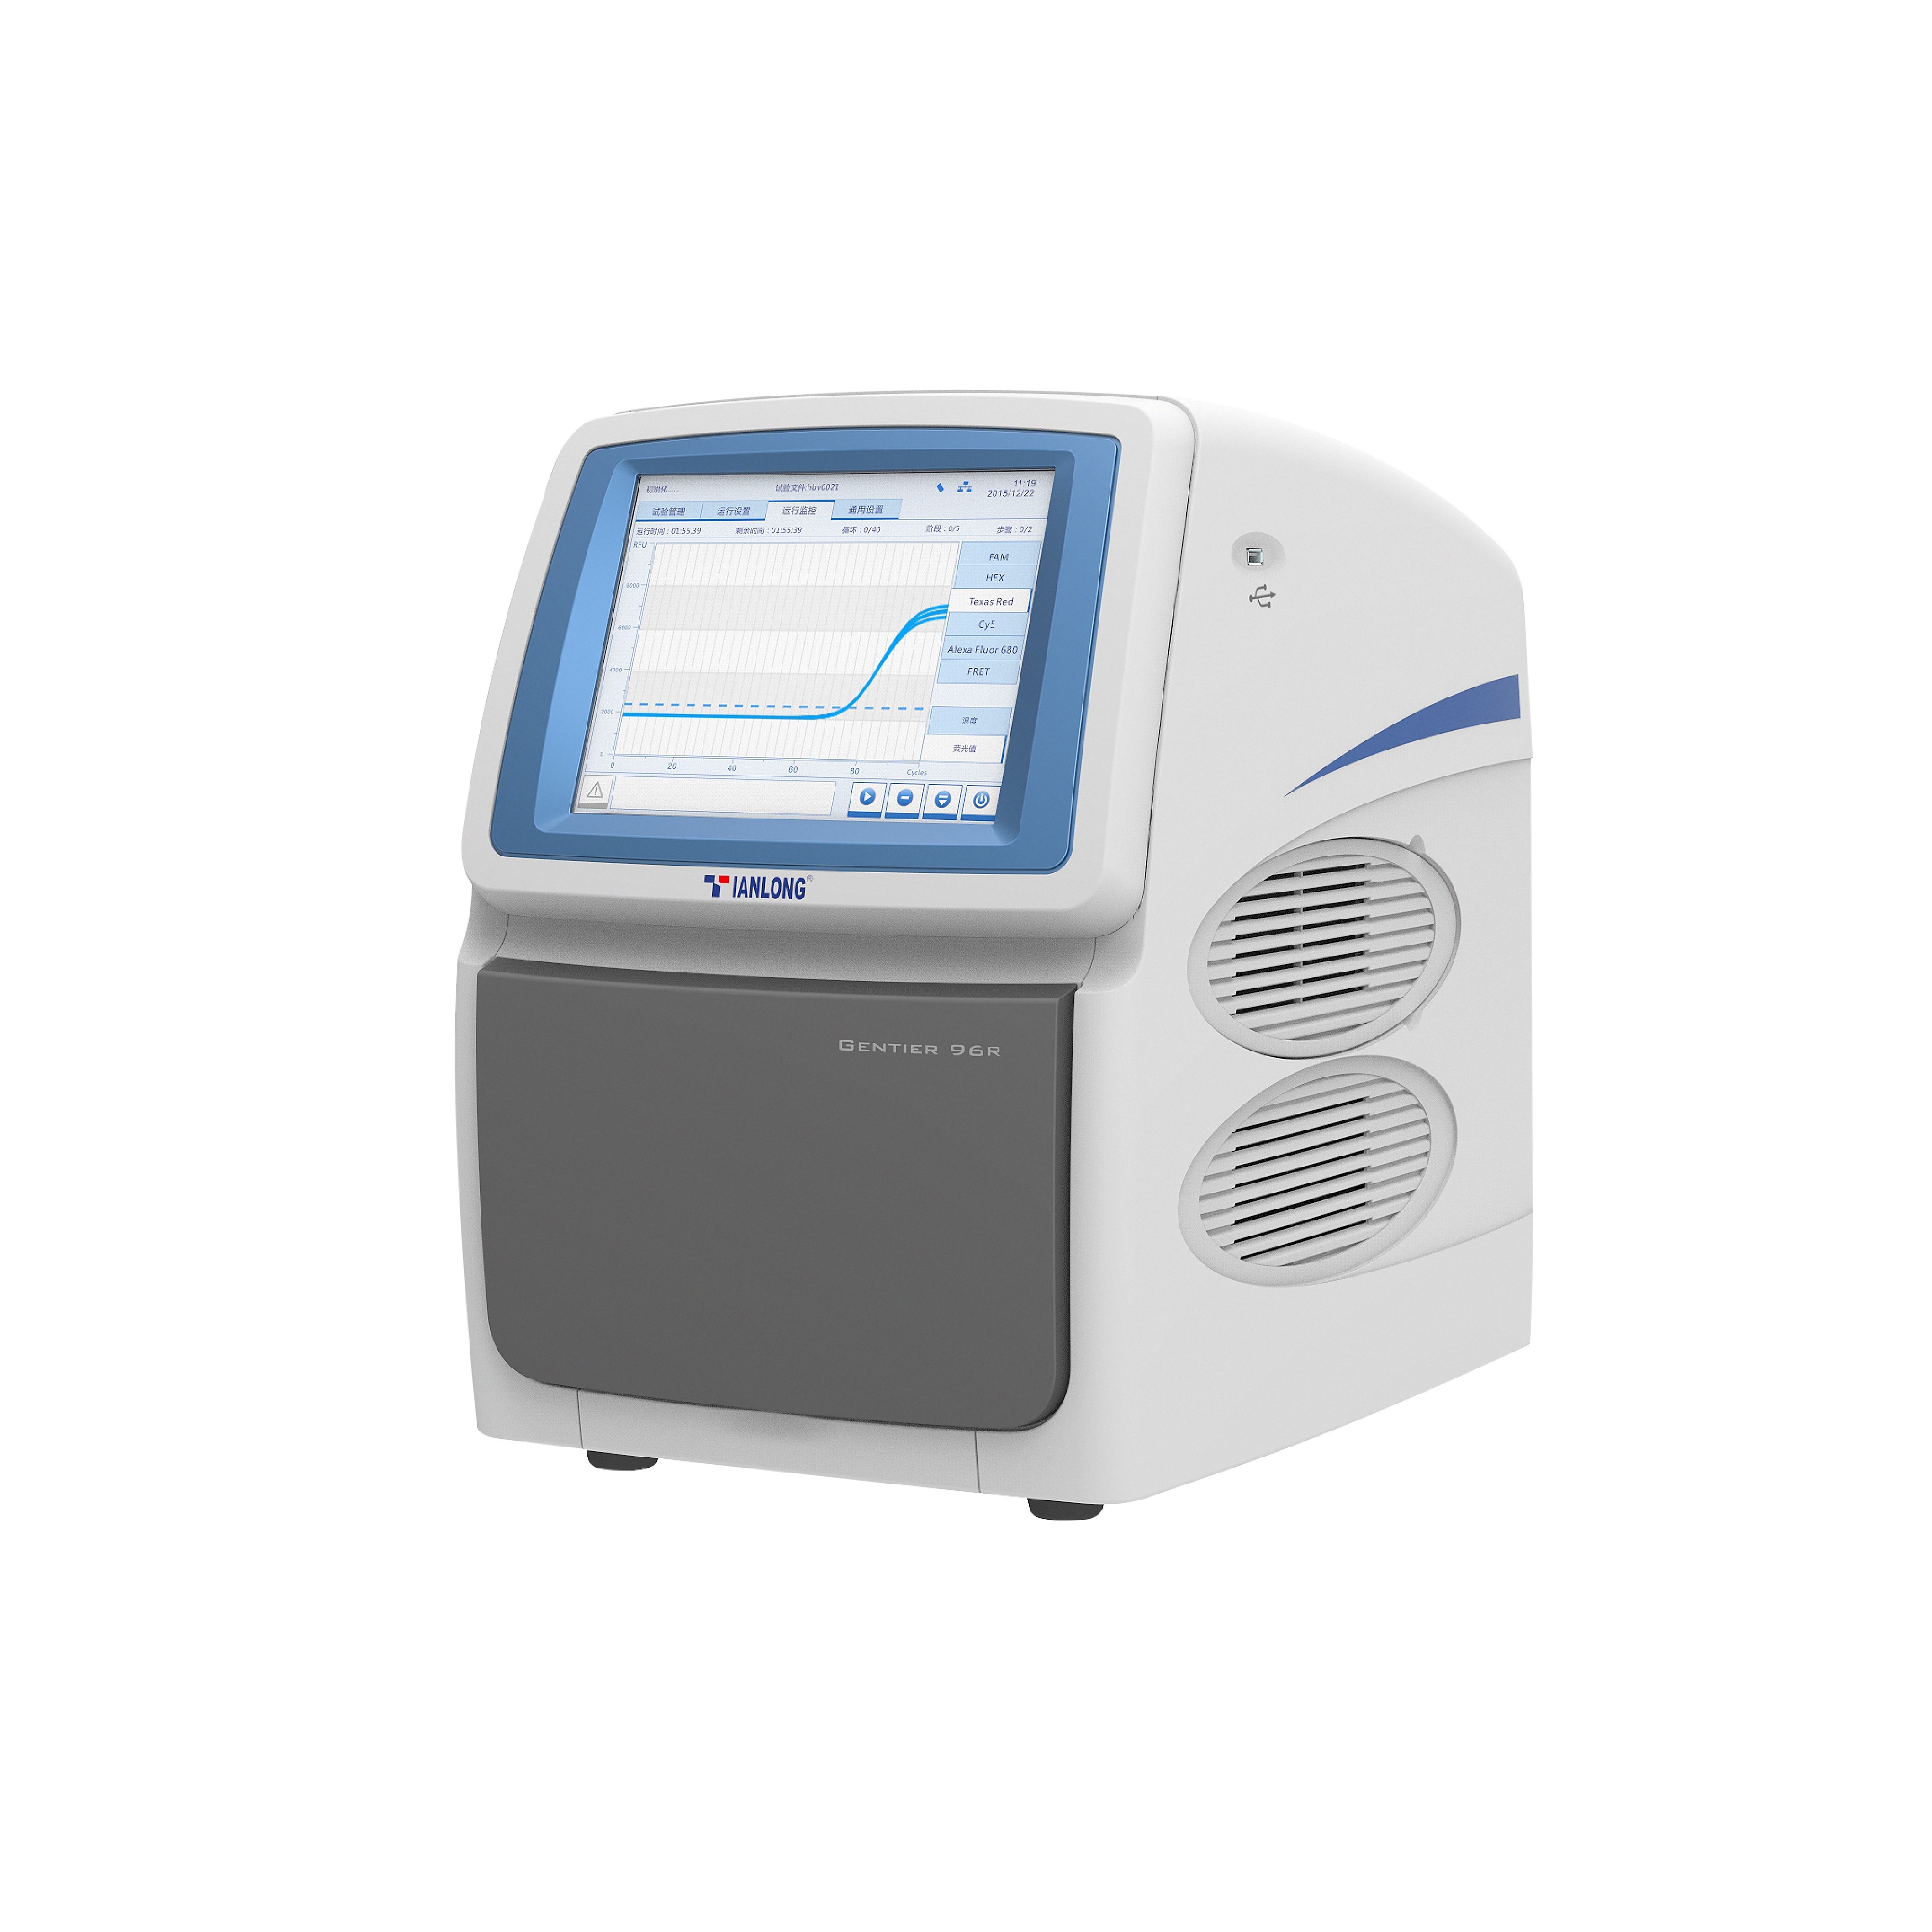 دستگاه ریل تایم پی سی آر - جنتایر 96 آر	 - Real-time PCR Systems - Gentier 96R	 - Xi’an Tianlong Science & Technology CO.,LTD	 - دستگاه - سلولی و مولکولی - وستا تجهیز پارت